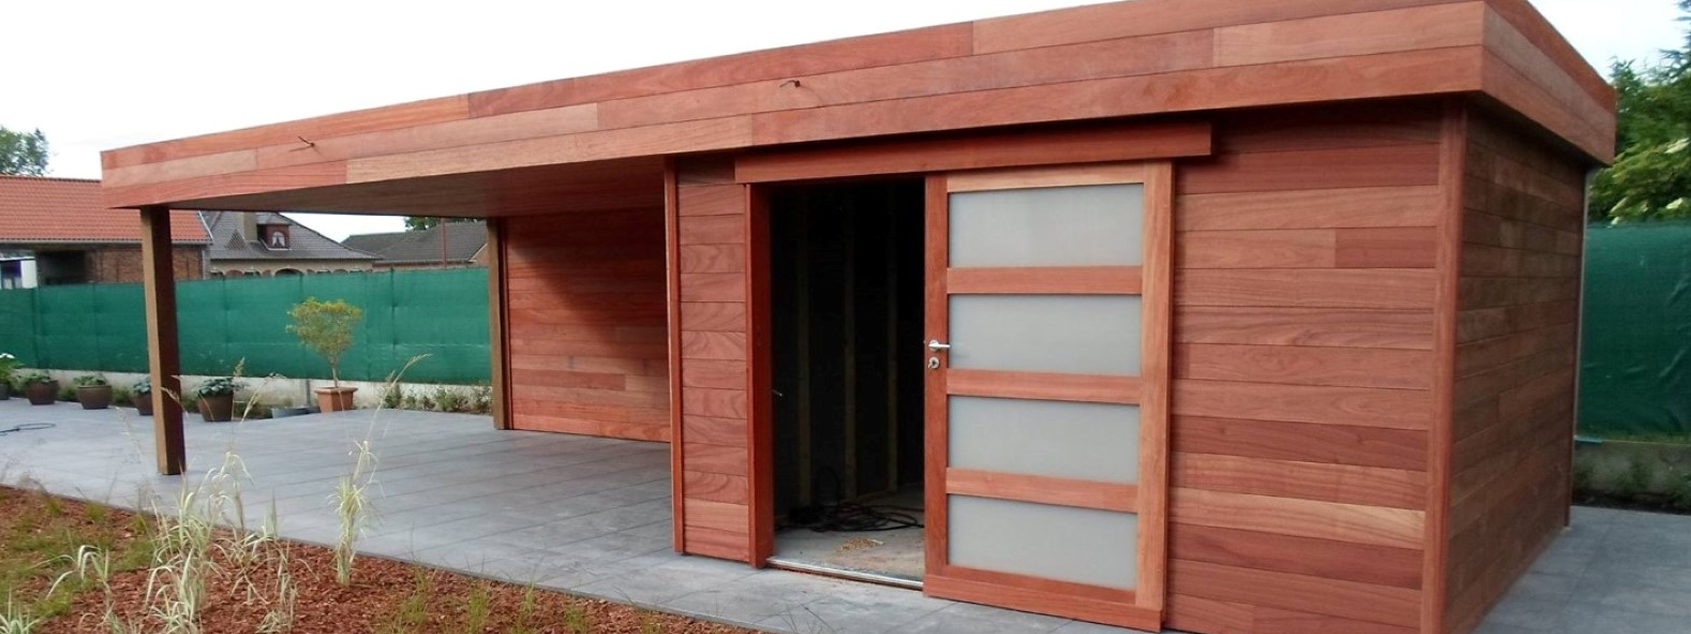 Moderne tuinberging rood hout met glazen deur en terrasoverkapping voor klant uit Oost Vlaanderen